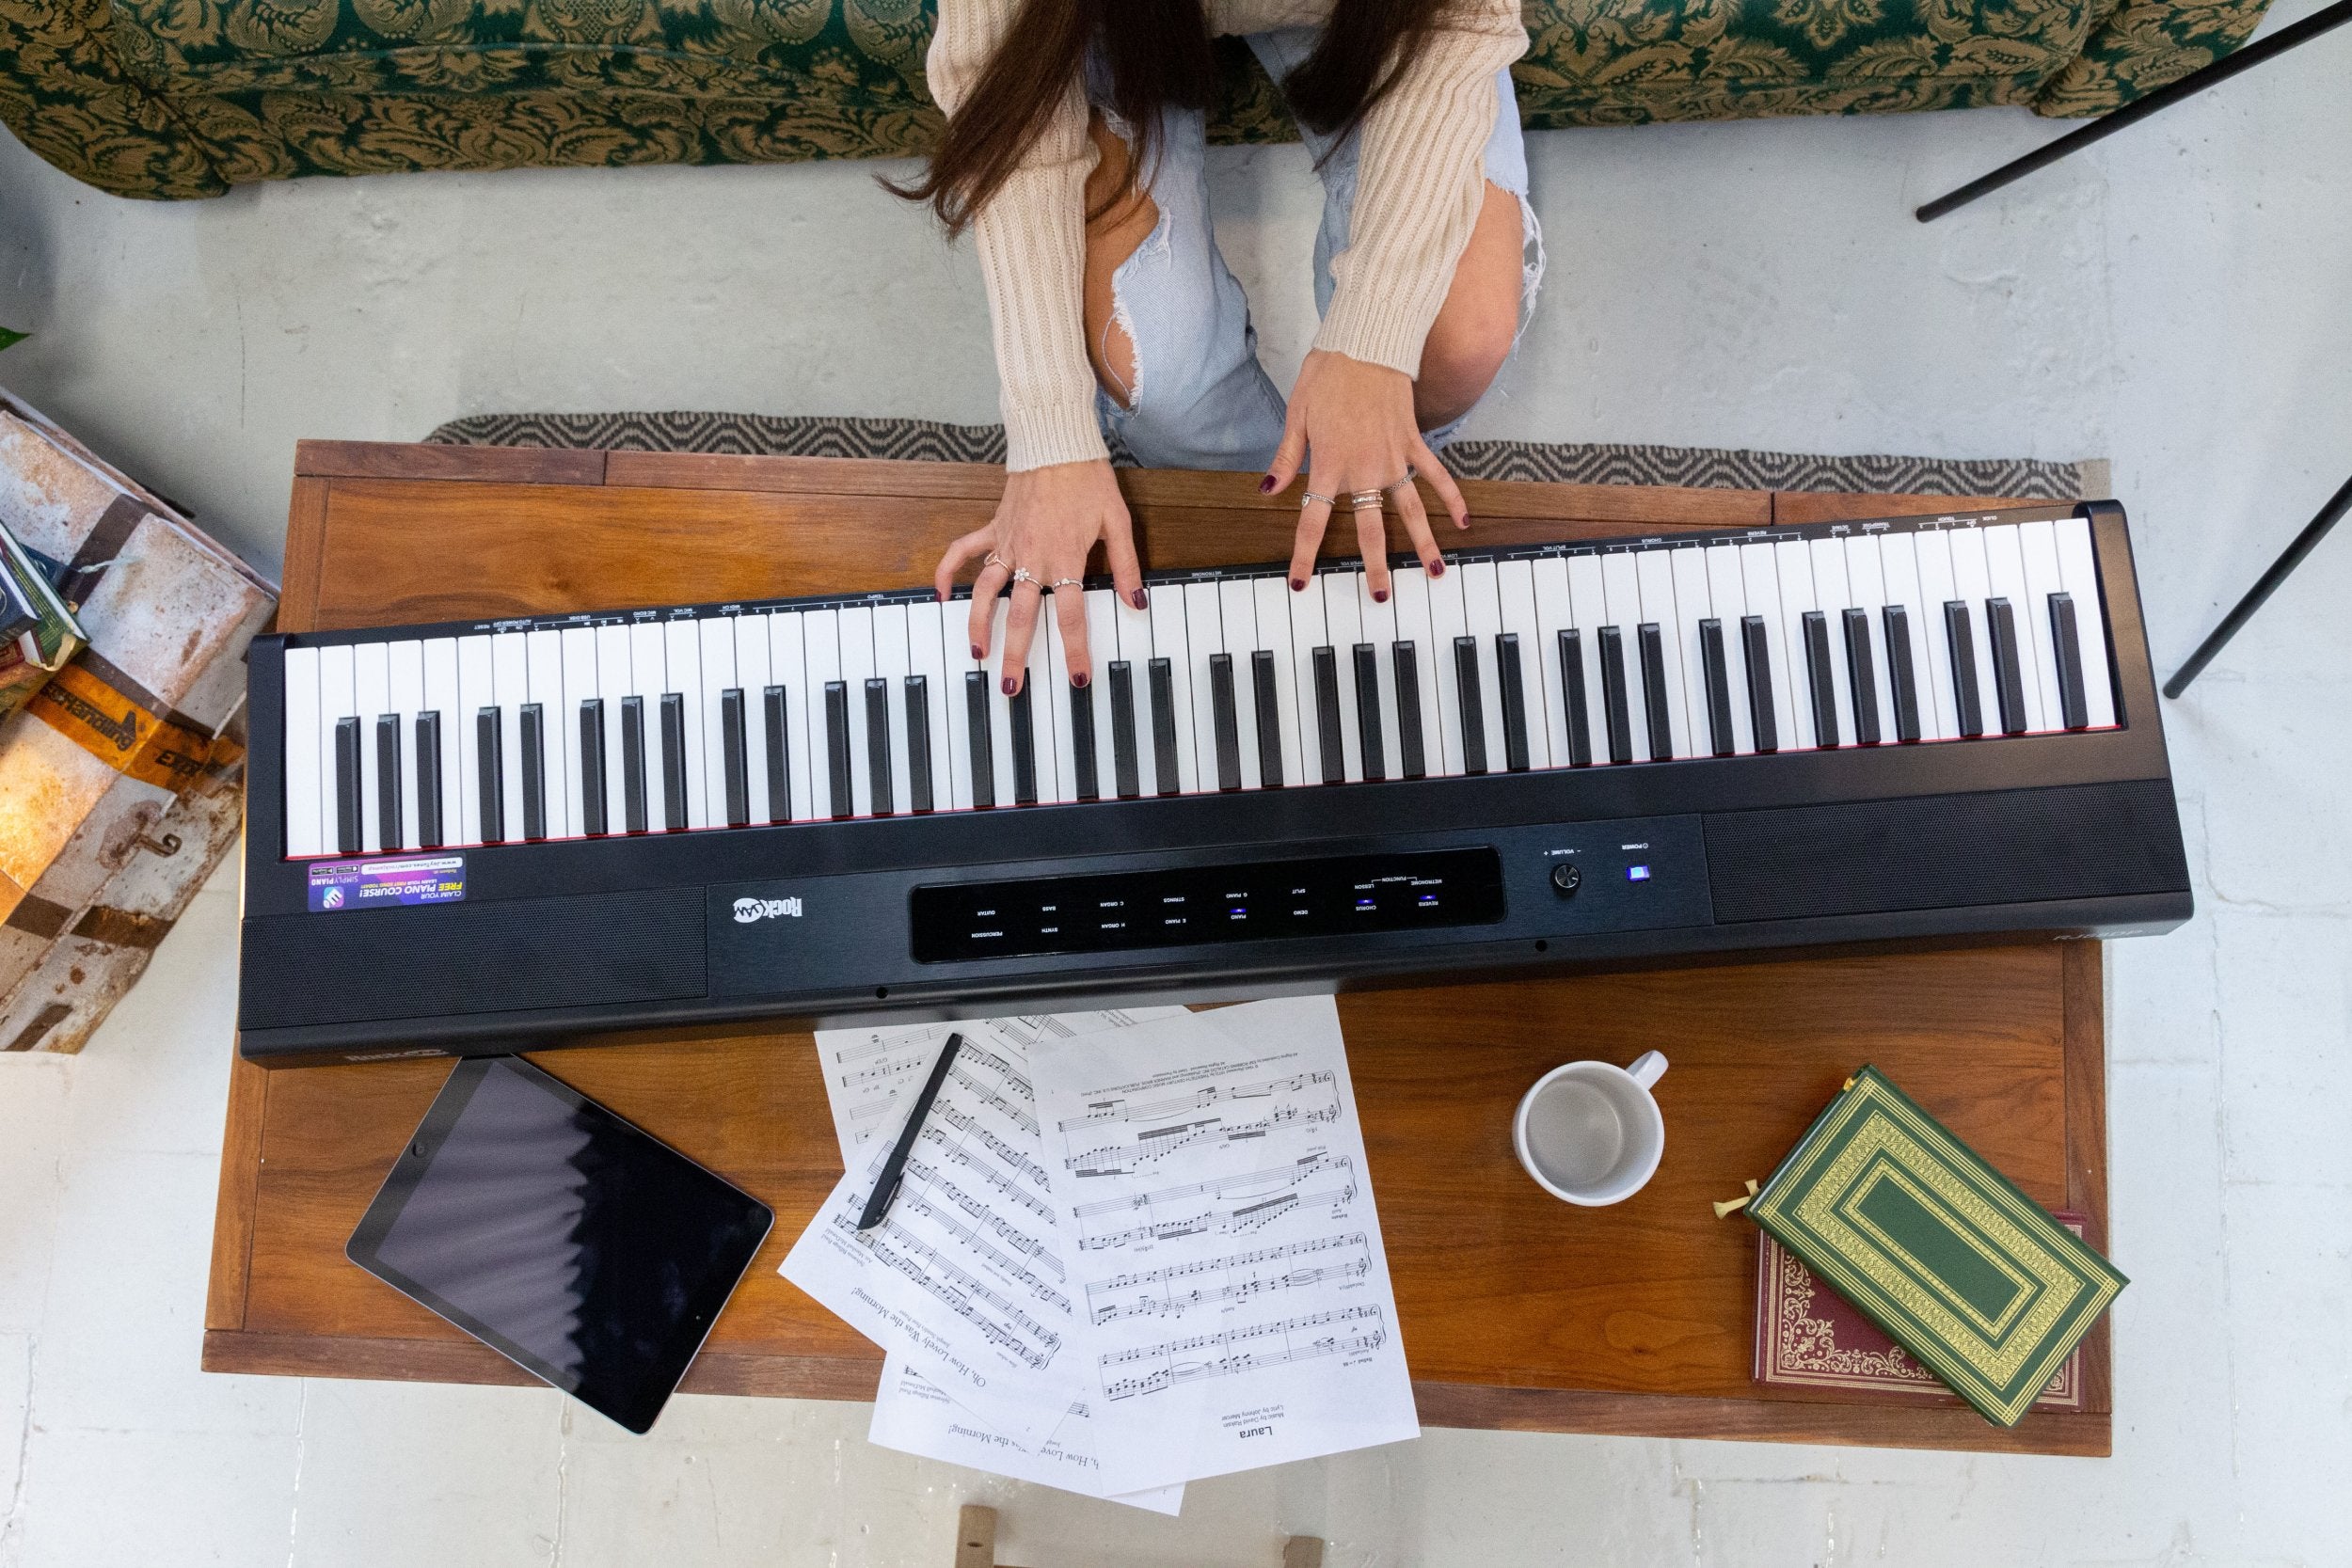 Lifestyle Image Of Woman Playing 88 RockJam 88 Key Digital Piano